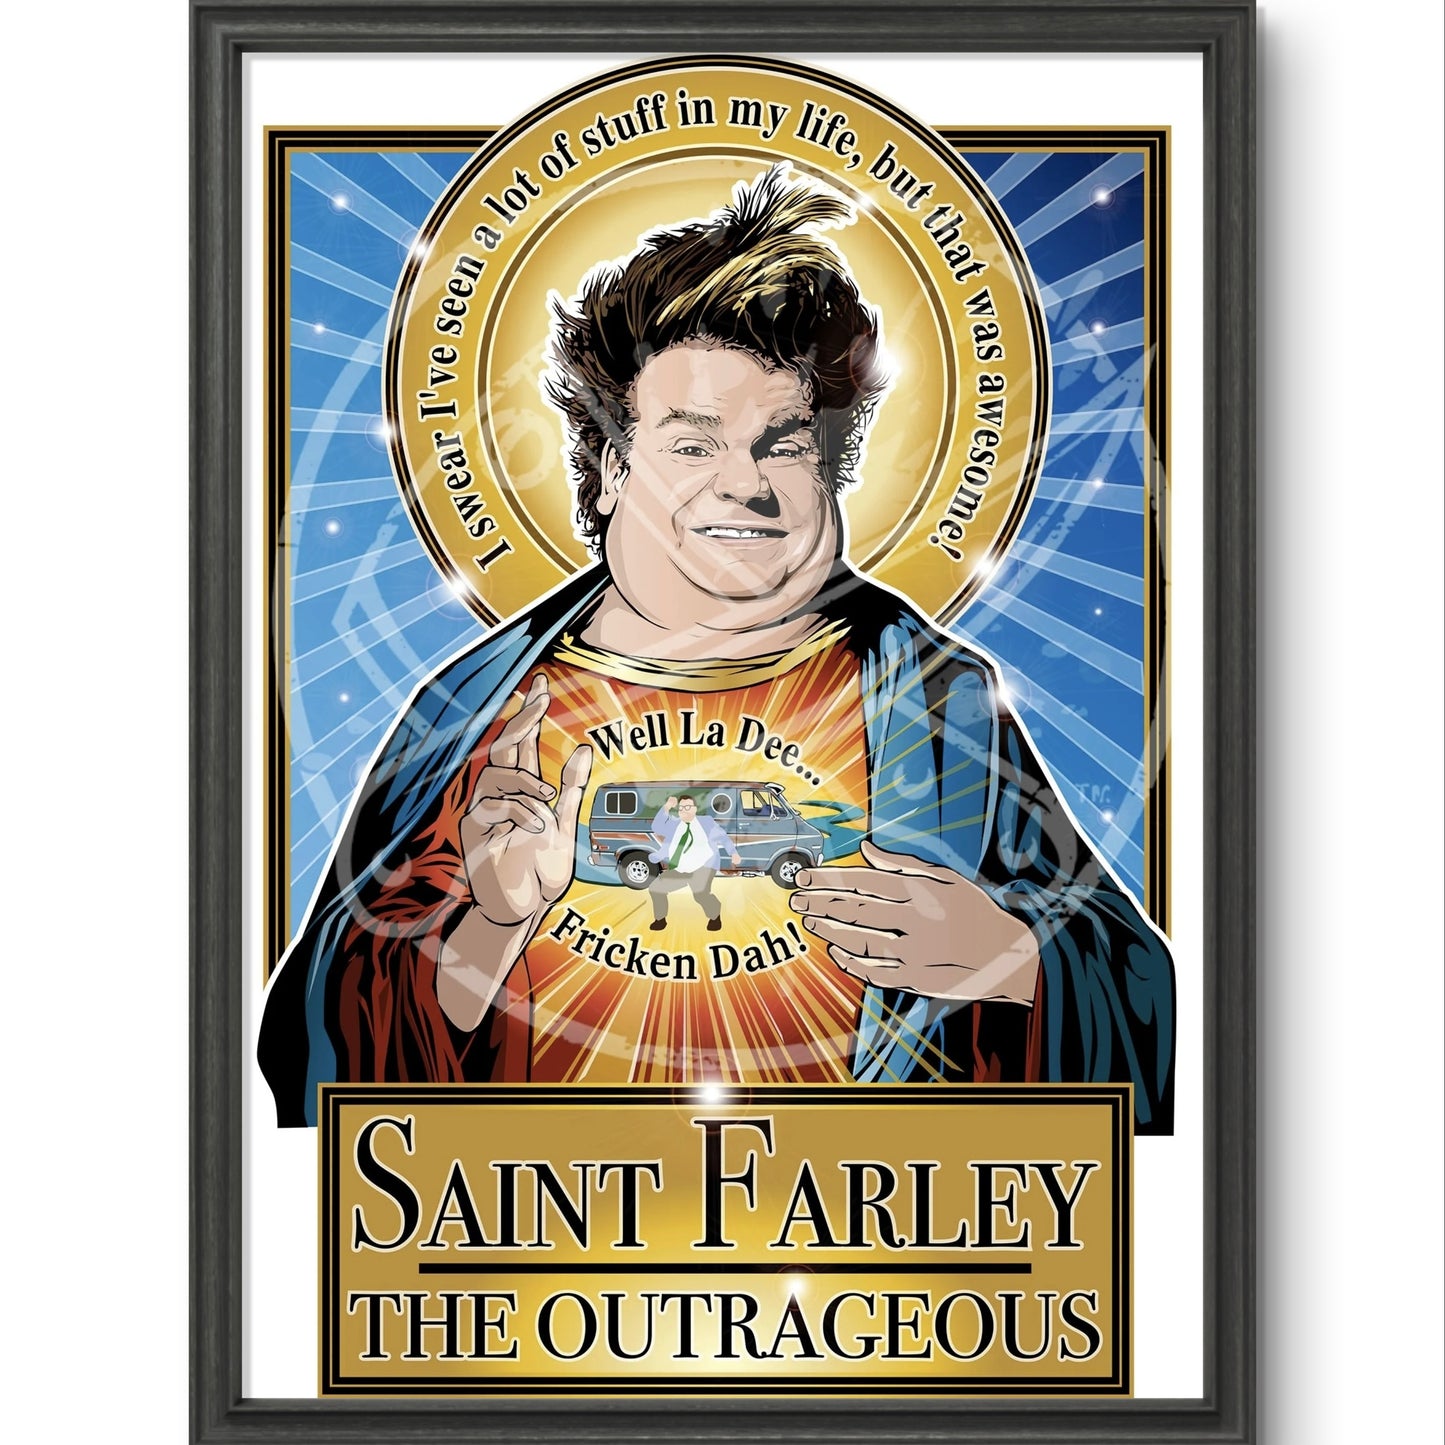 Saint Farley The Outrageous Poster Cleaverandblade.com